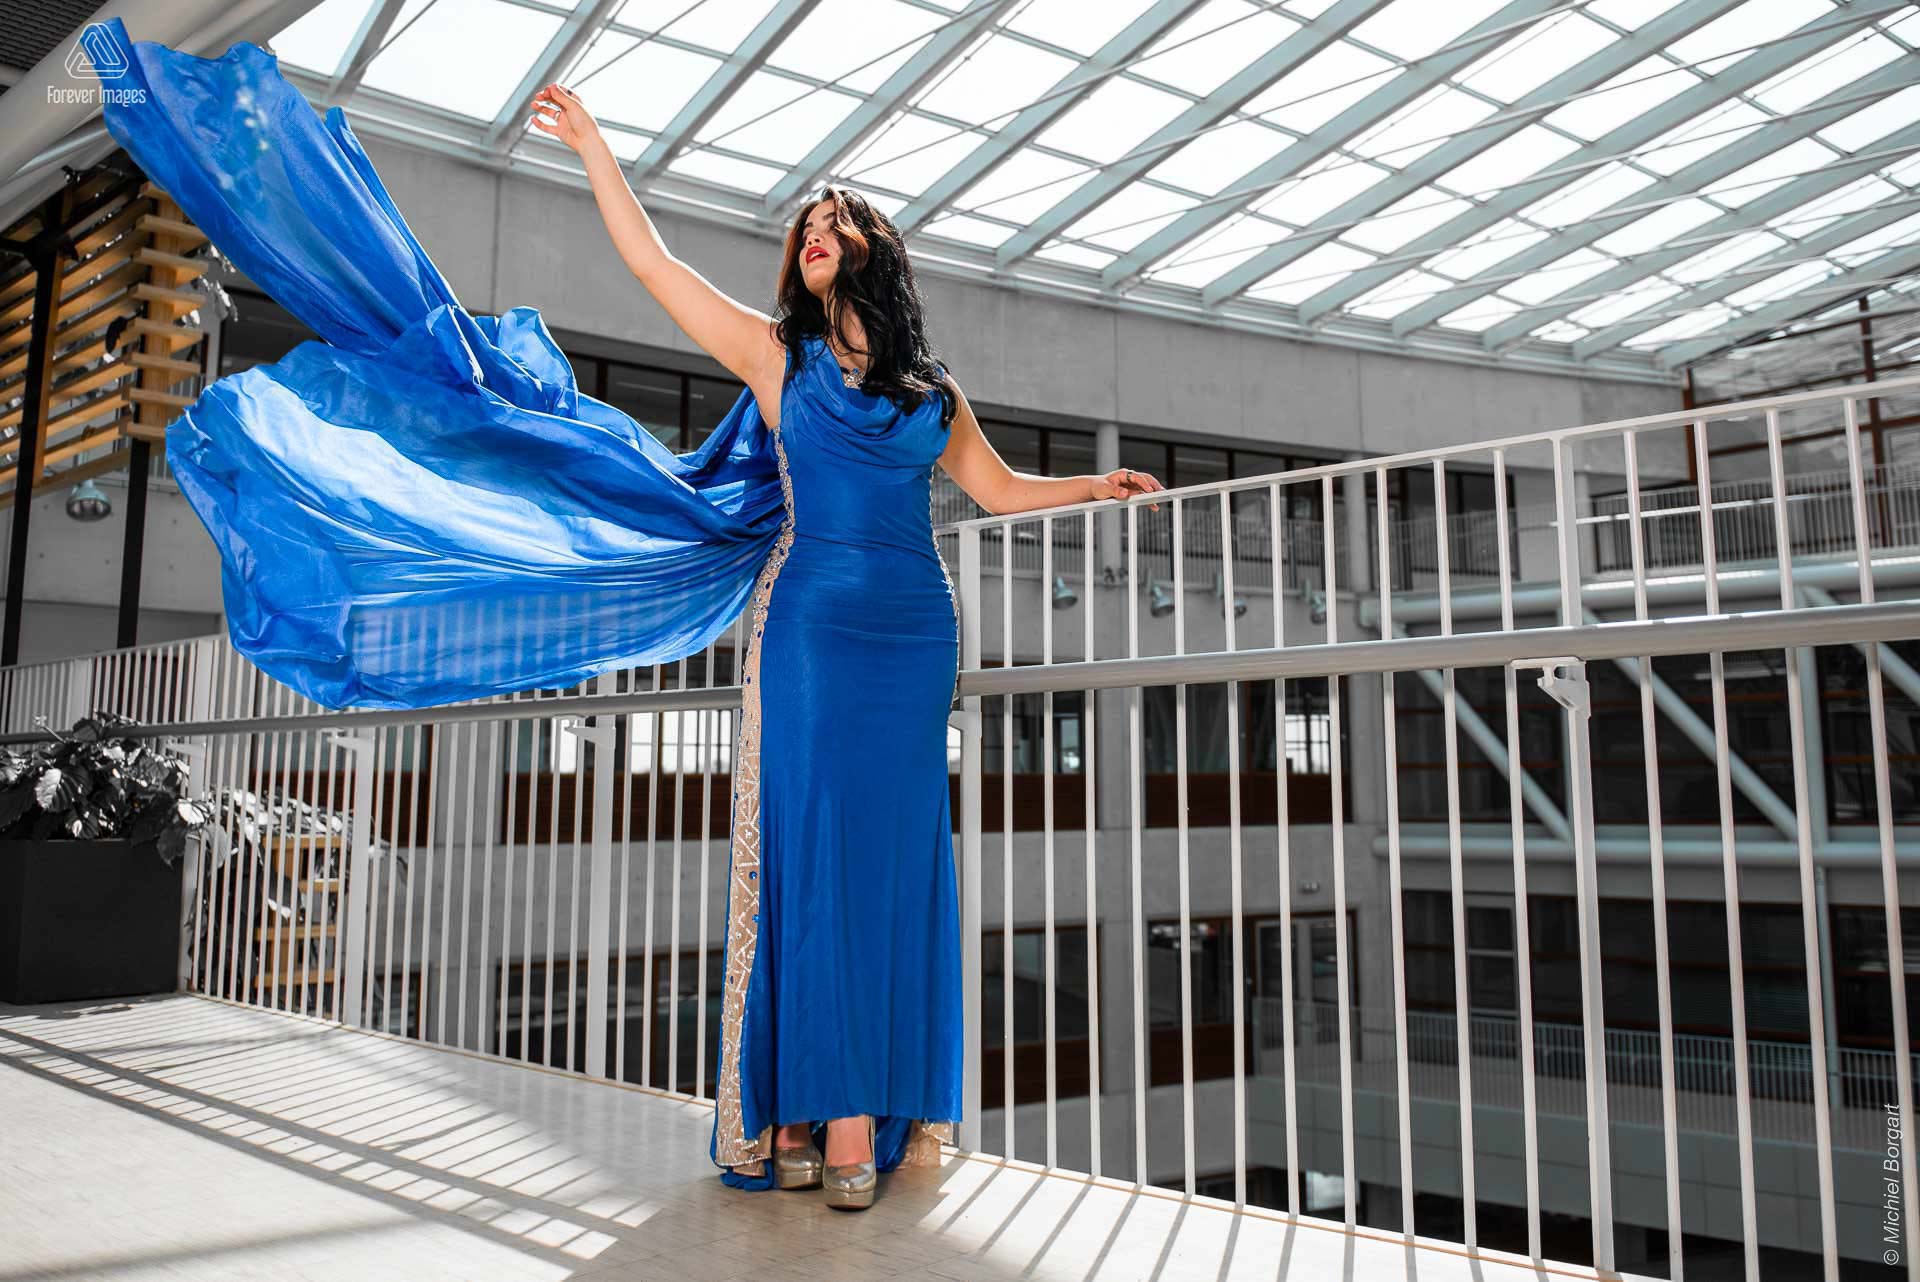 Fashionfoto glamour mooie dame op balustrade blauwe jurk | Daphna Akkermans David Cardenas | Fashionfotograaf Michiel Borgart - Forever Images.